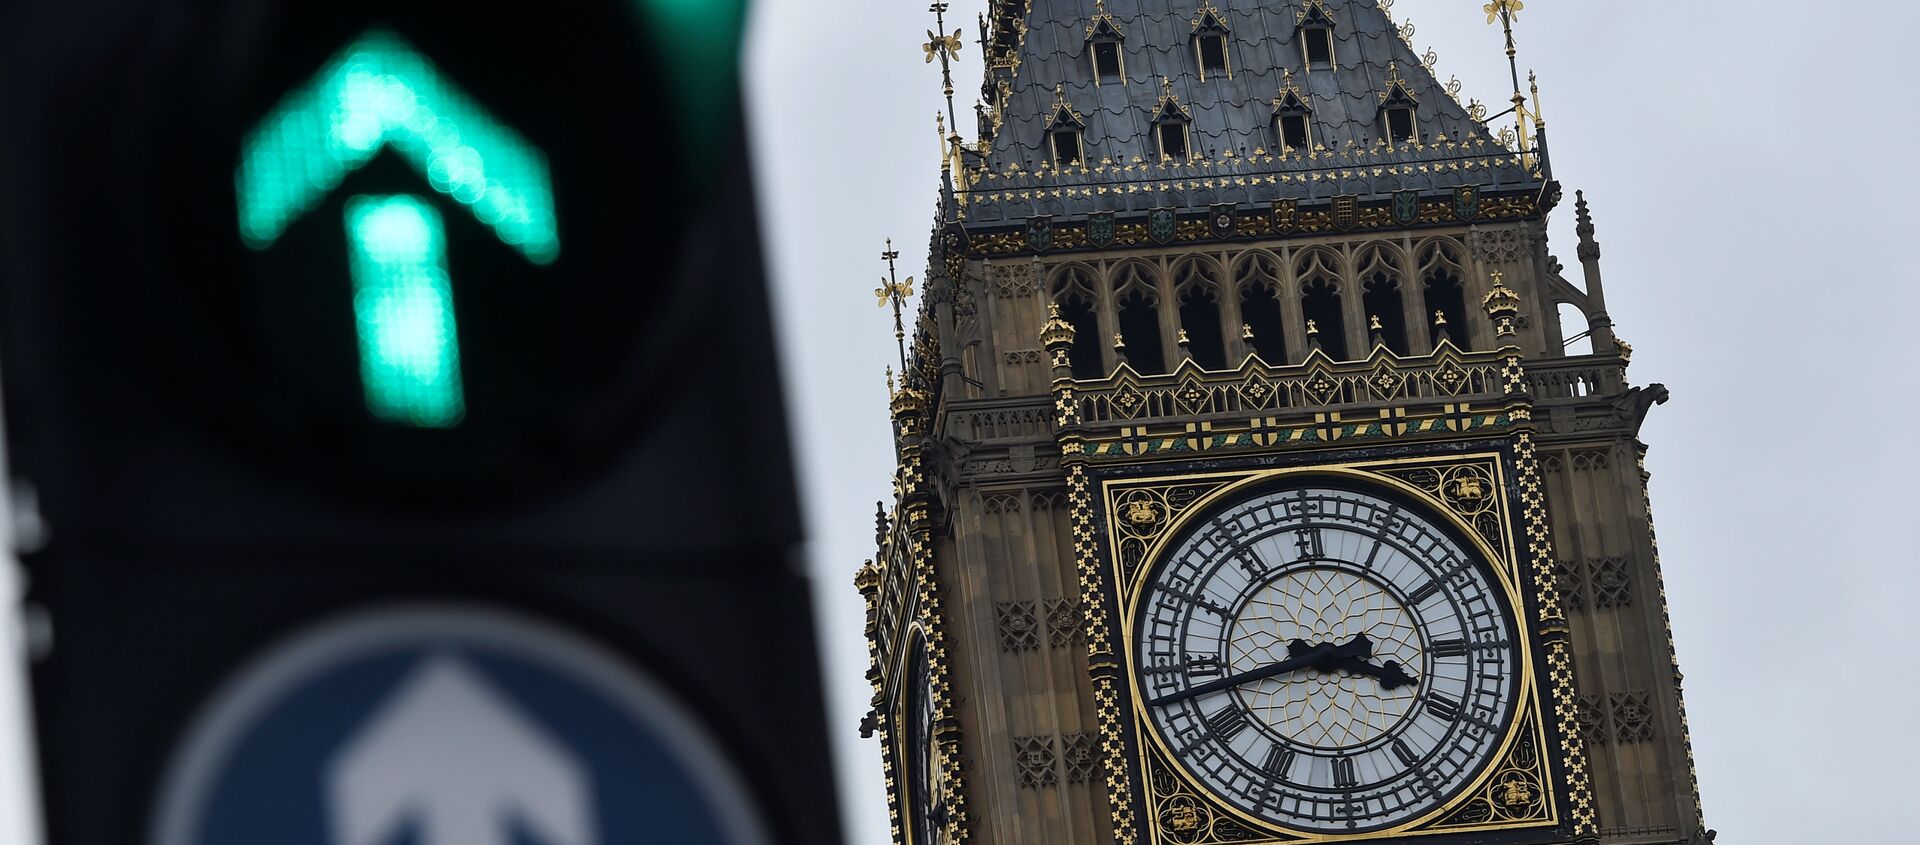 The Big Ben clocktower is seen in London, Britain, 12 March - Sputnik Afrique, 1920, 29.01.2020